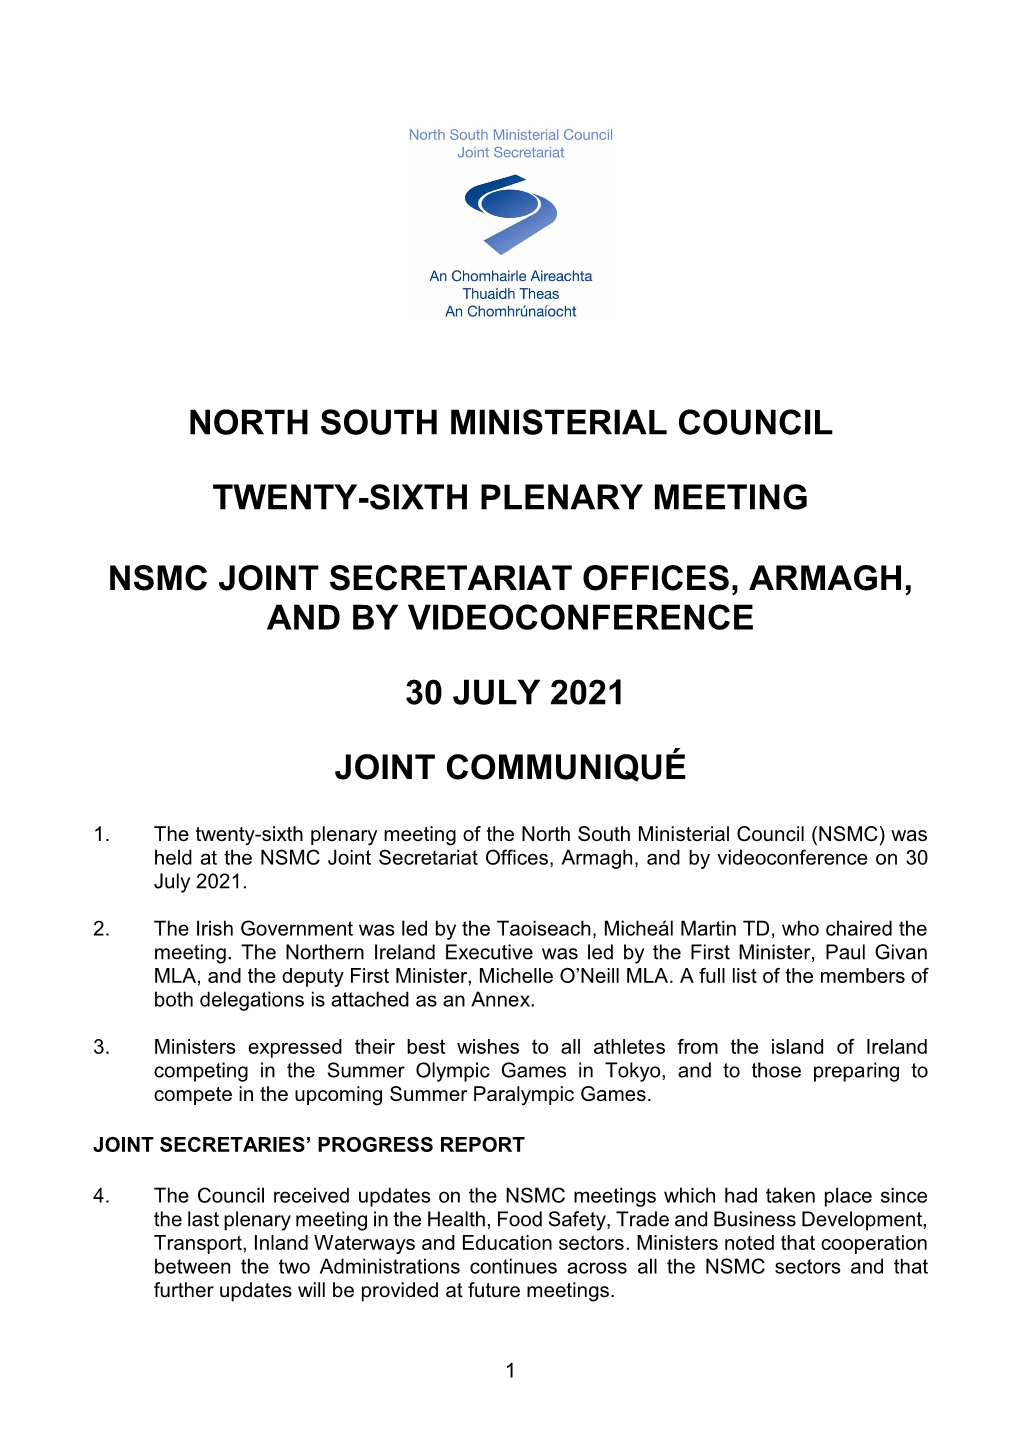 DP1699: NSMC Twenty Fourth Plenary Meeting Joint Communiqué